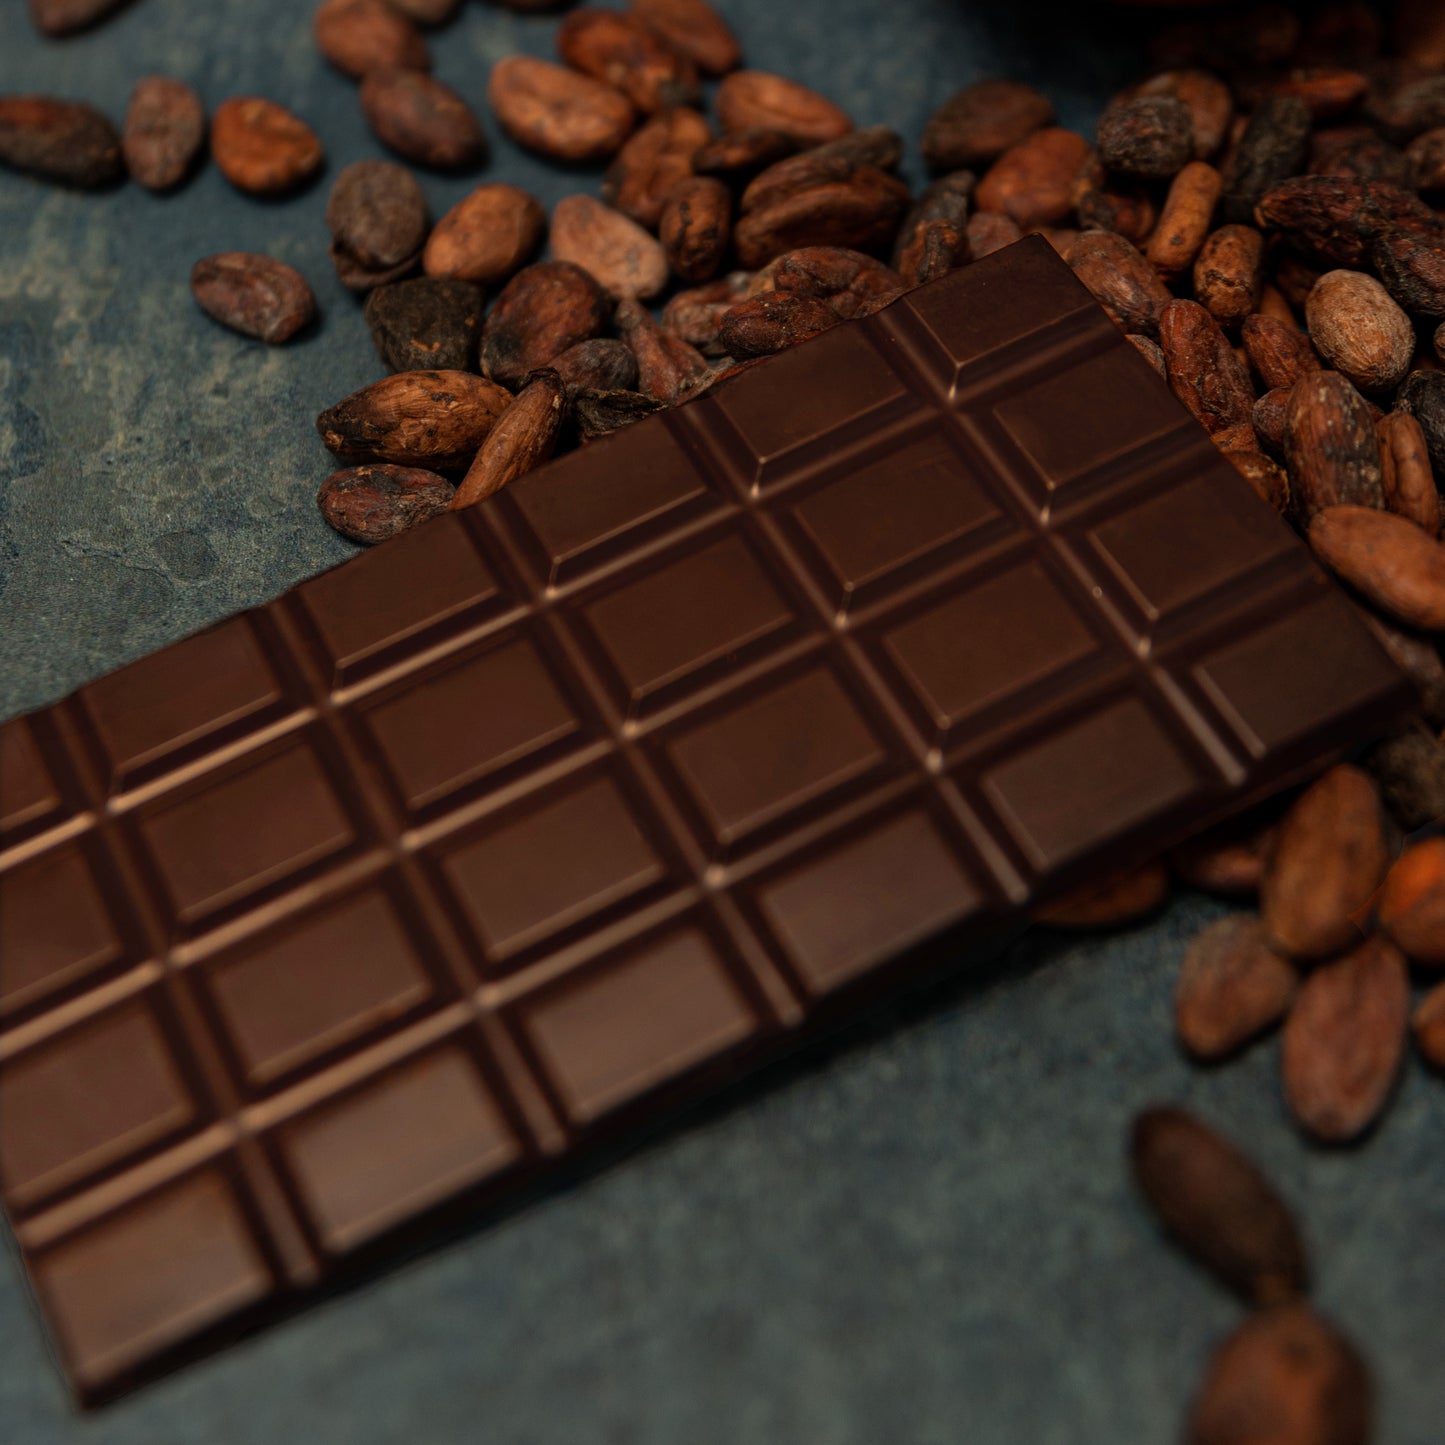 58% Sur del Lago  with Roasted Cacao Nibs.